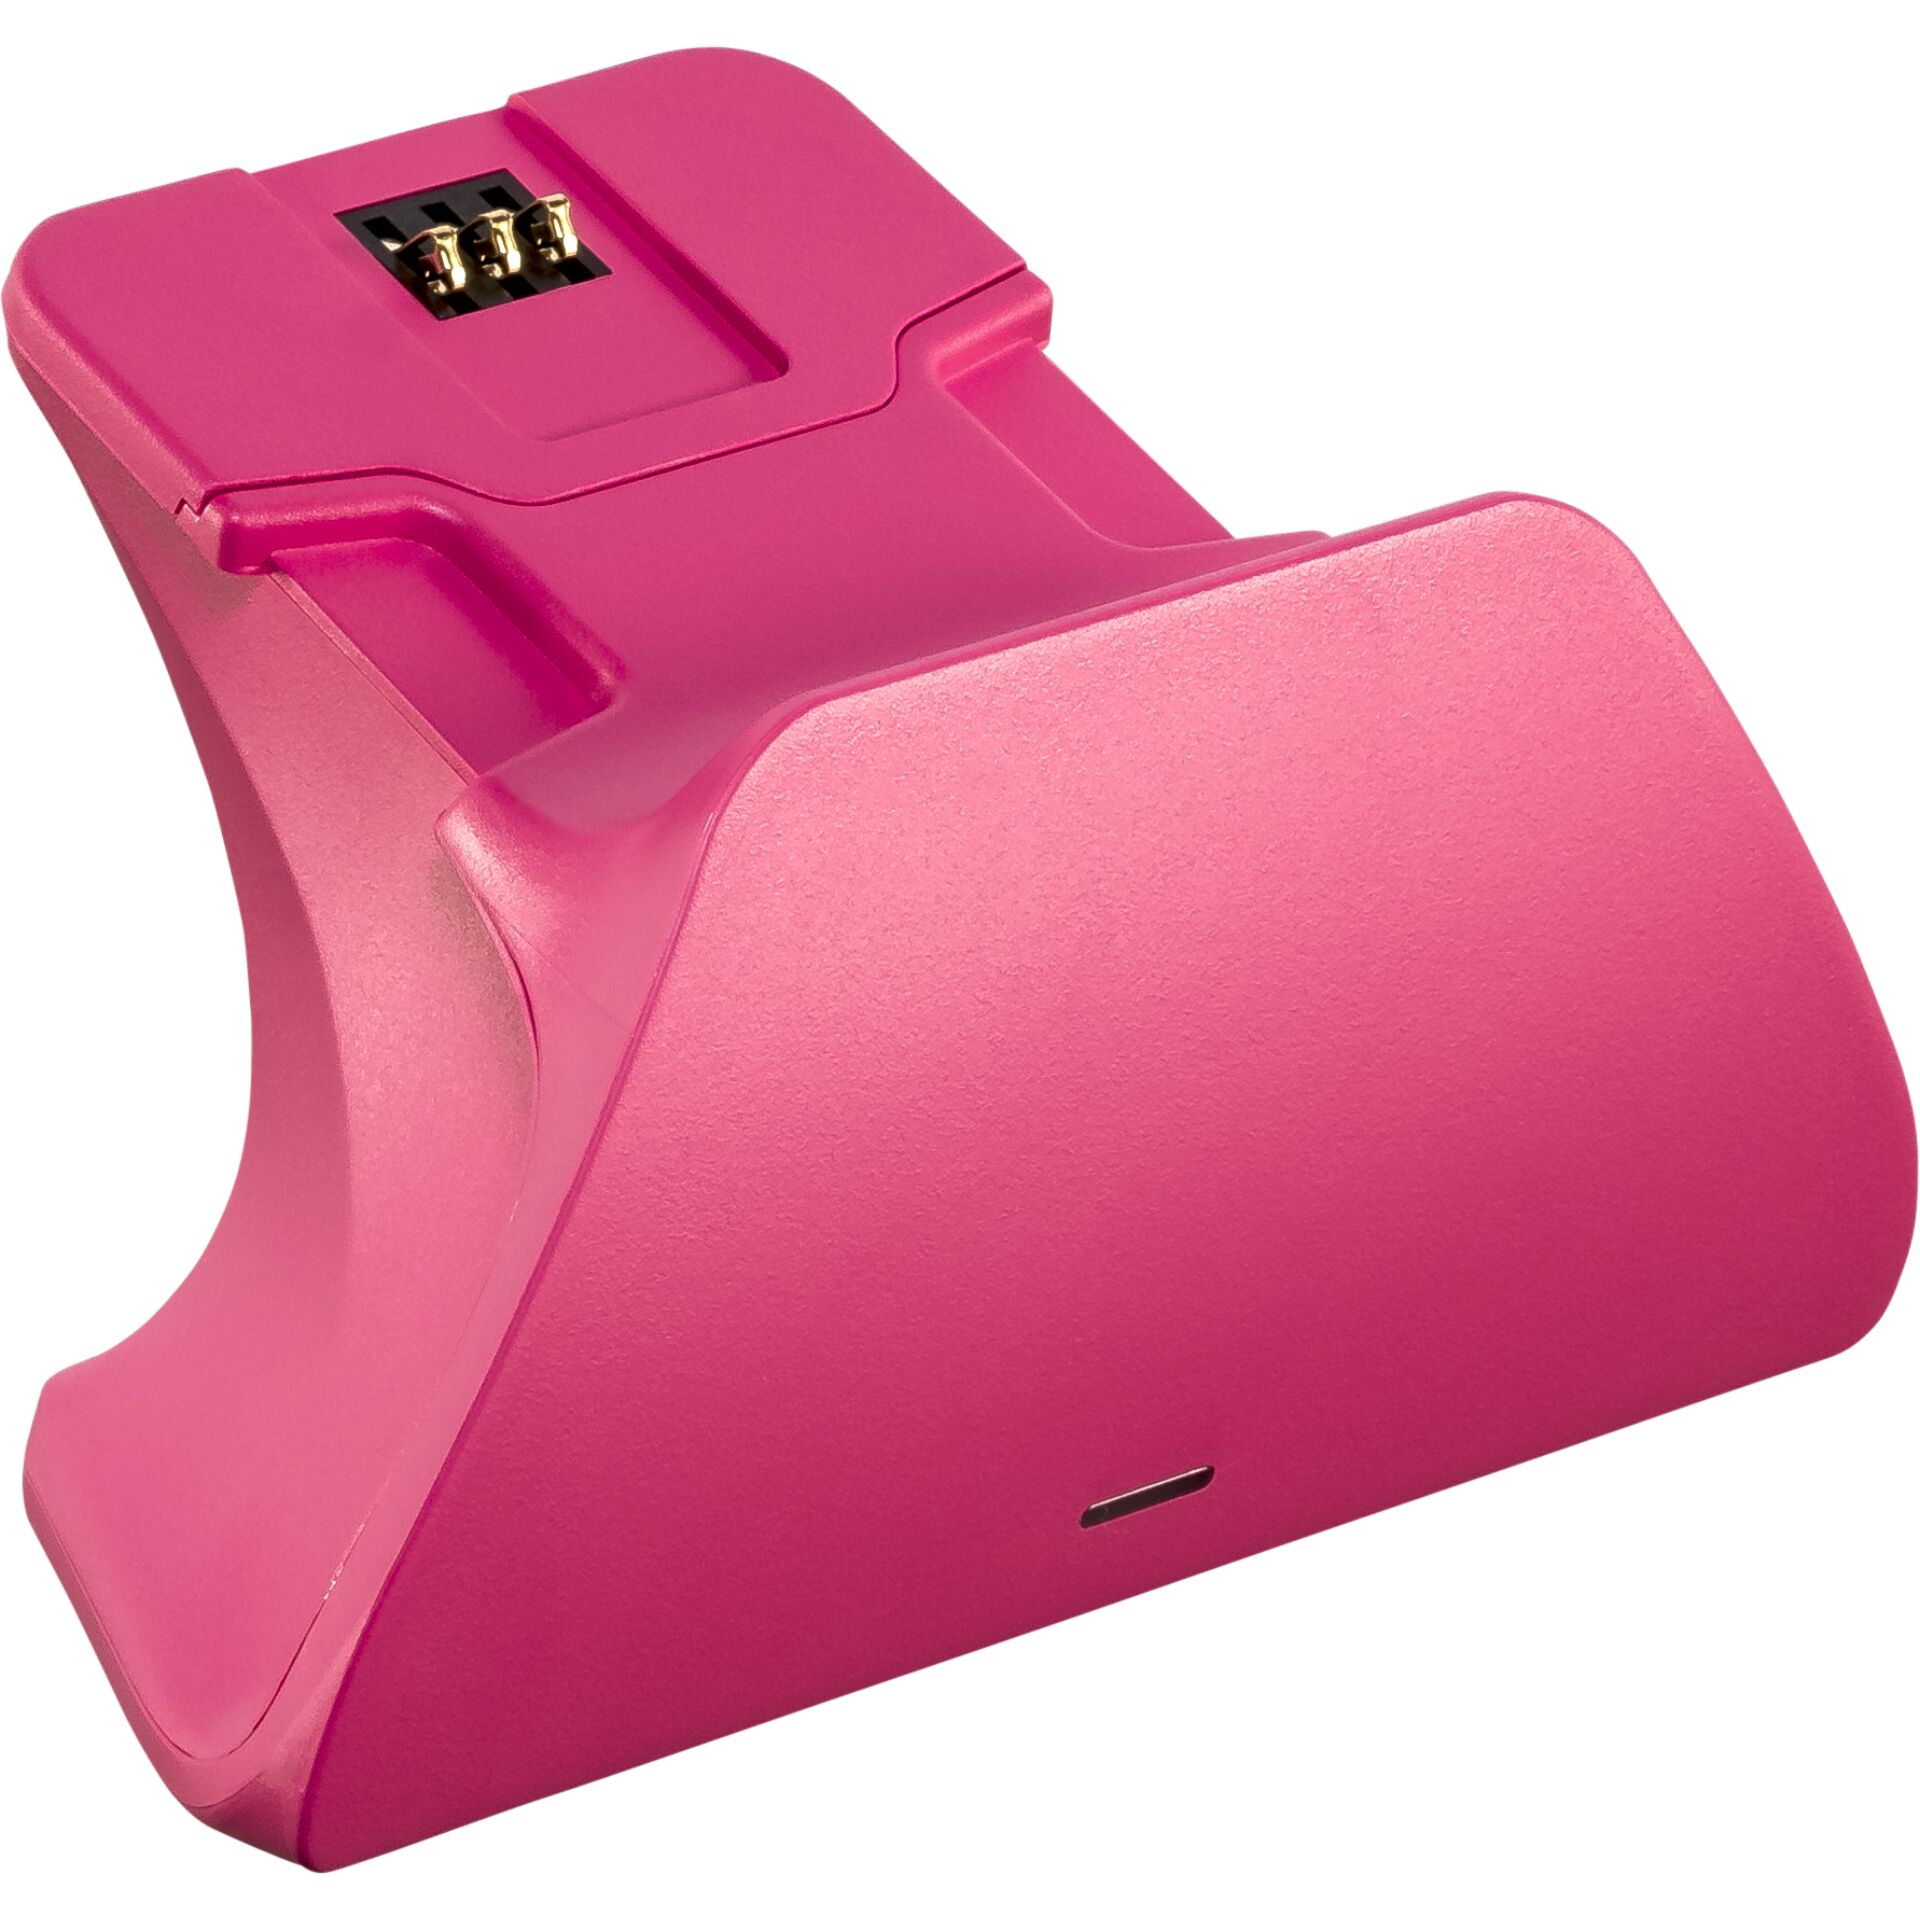 Razer Charging Stand Xbox pink